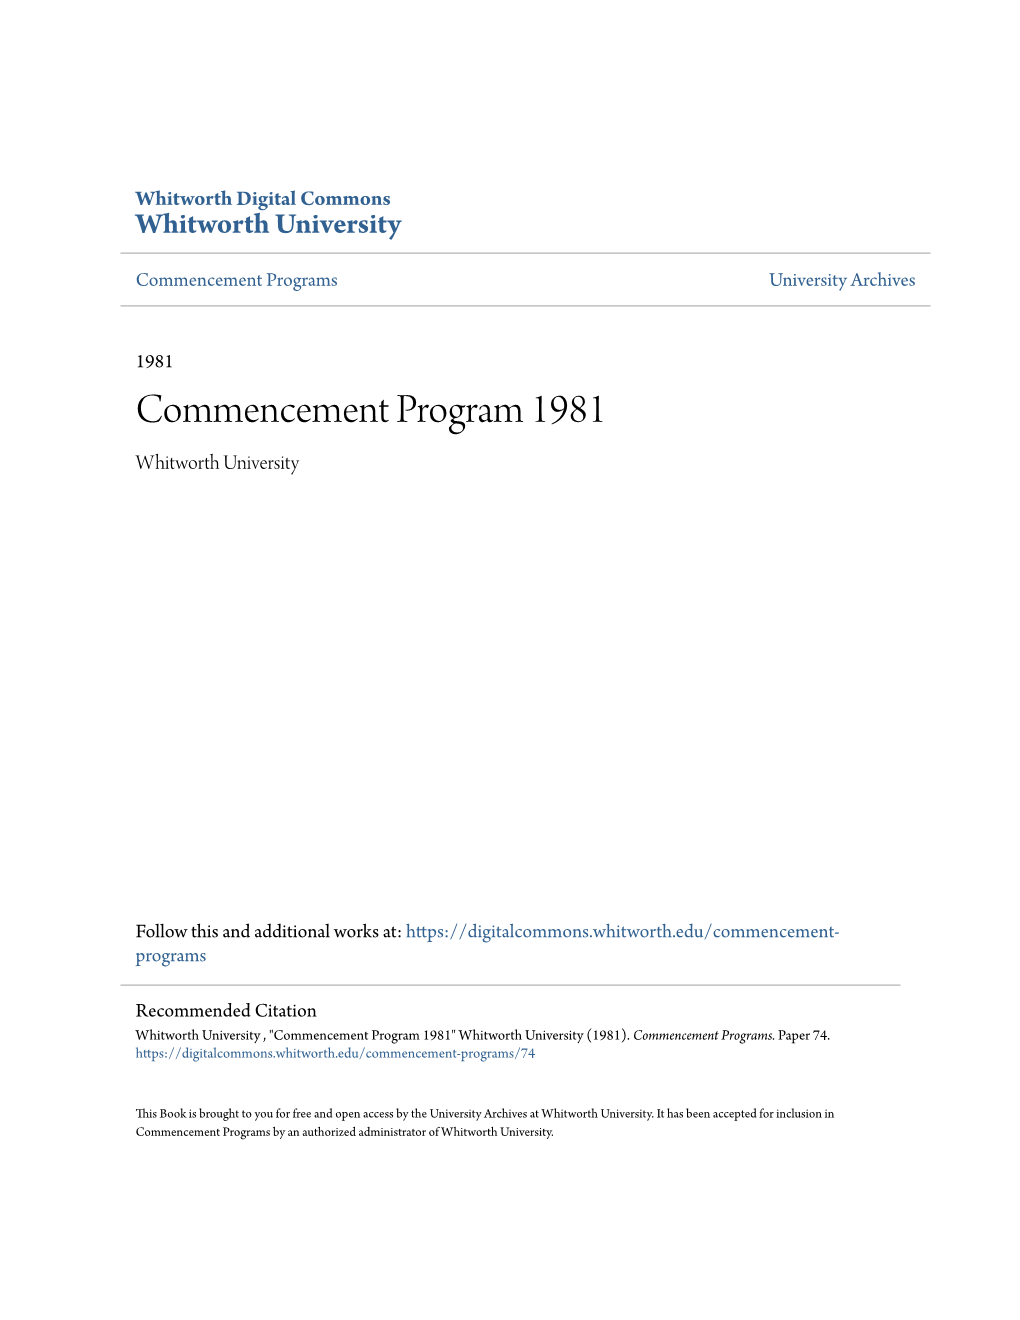 Commencement Program 1981 Whitworth University